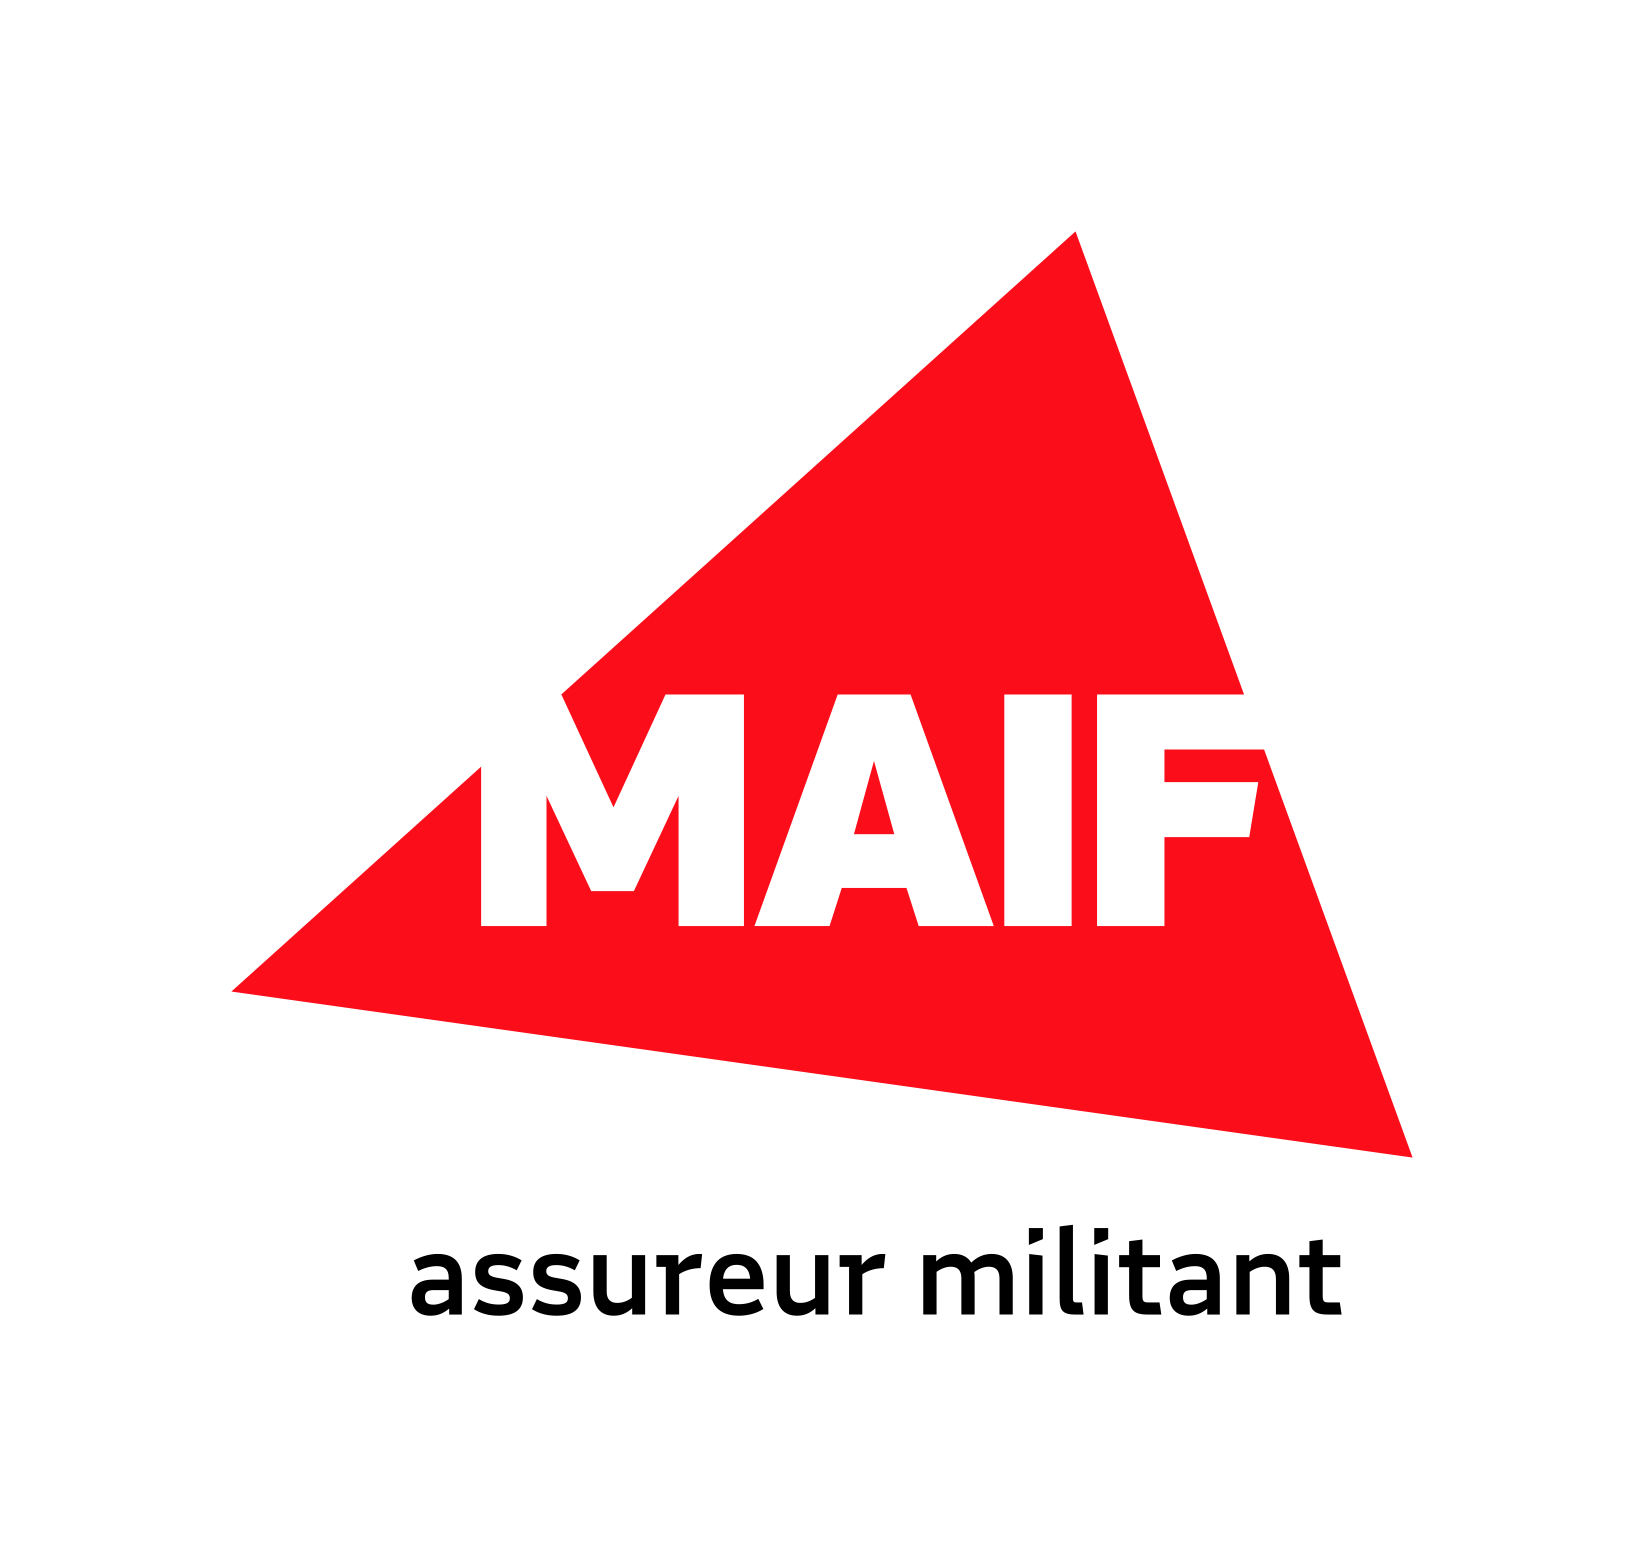 MAIF_Logo_assureur_militant